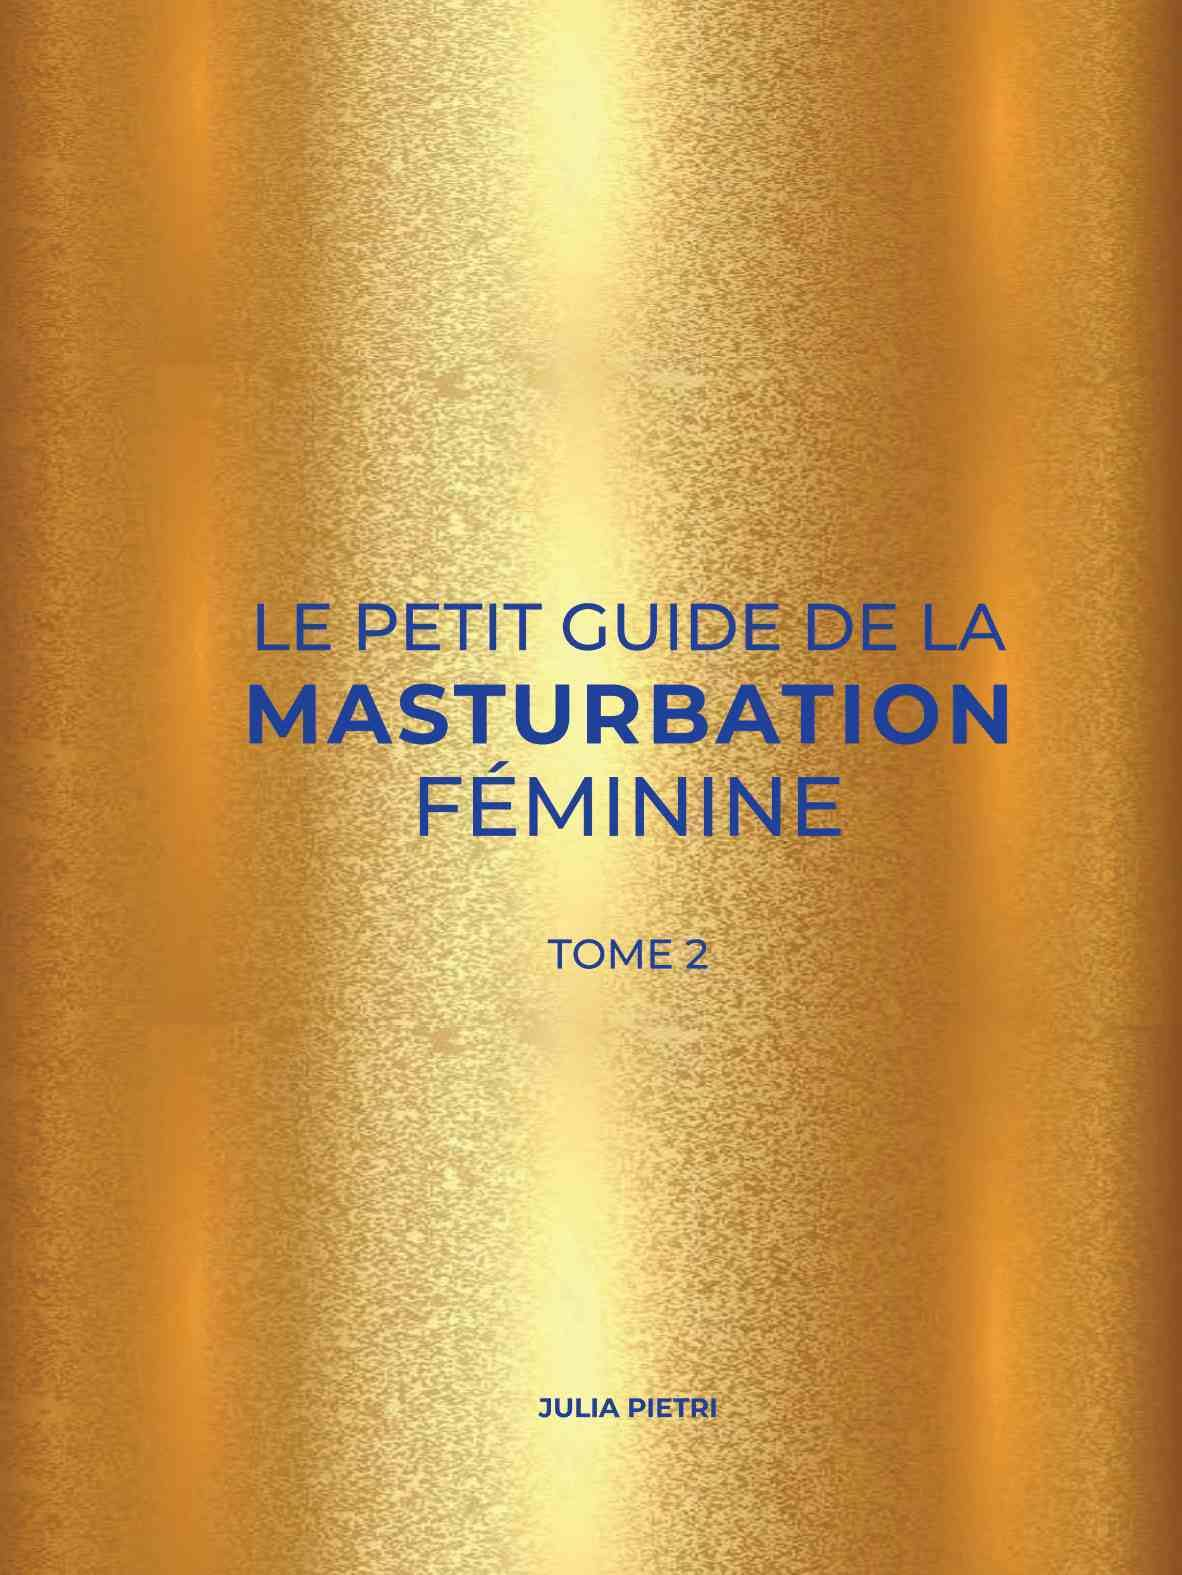 Le Petit Guide de la Masturbation Féminine. Tome 2